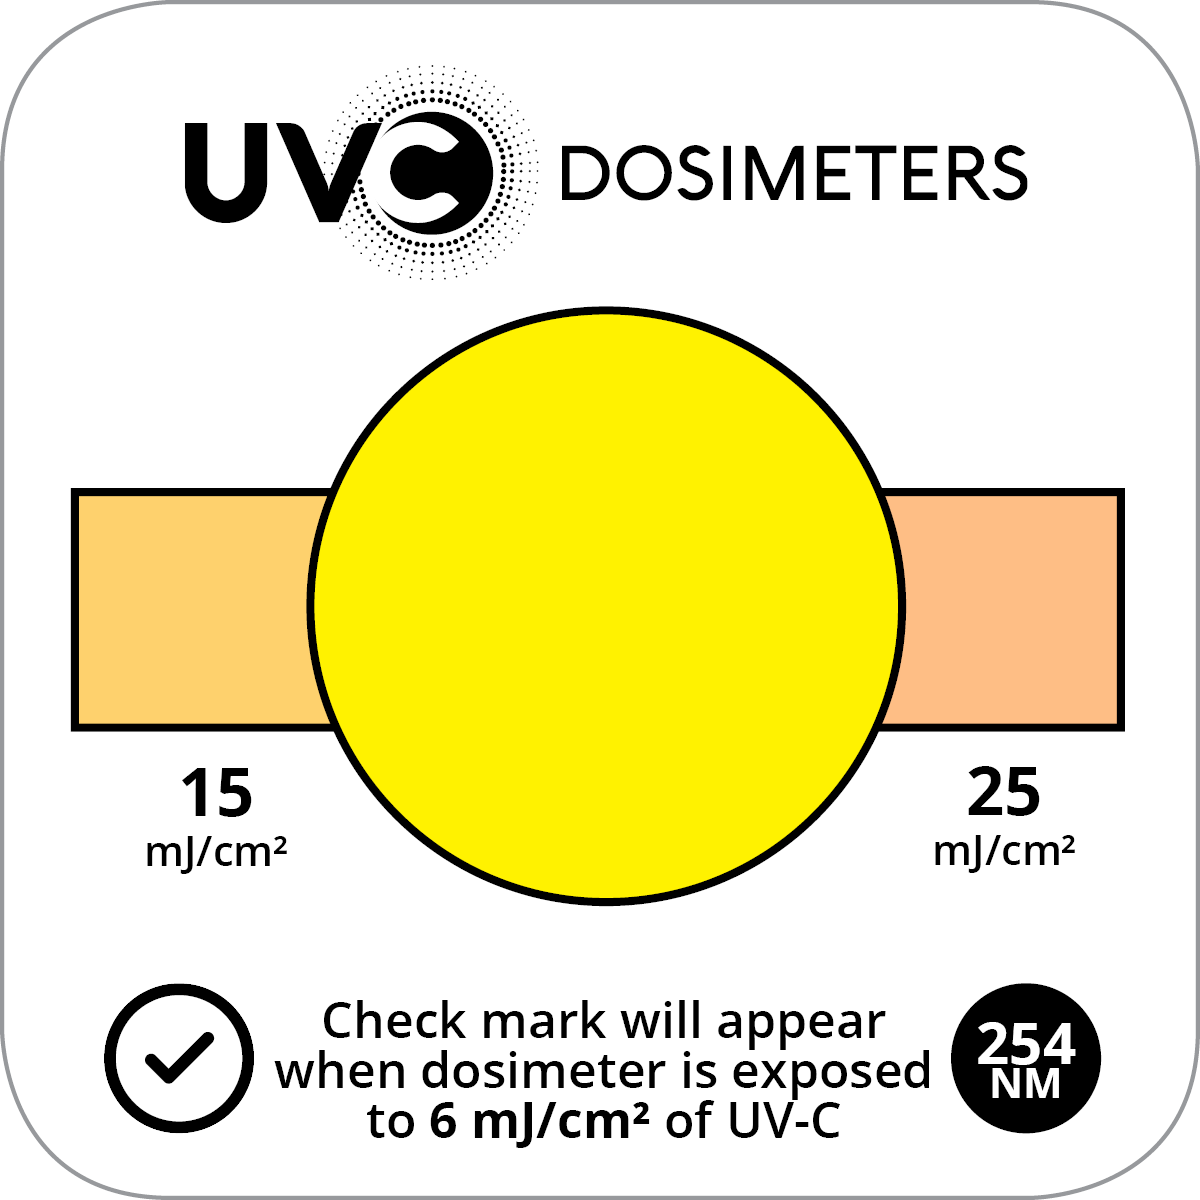 UVC 1000 dosimeters